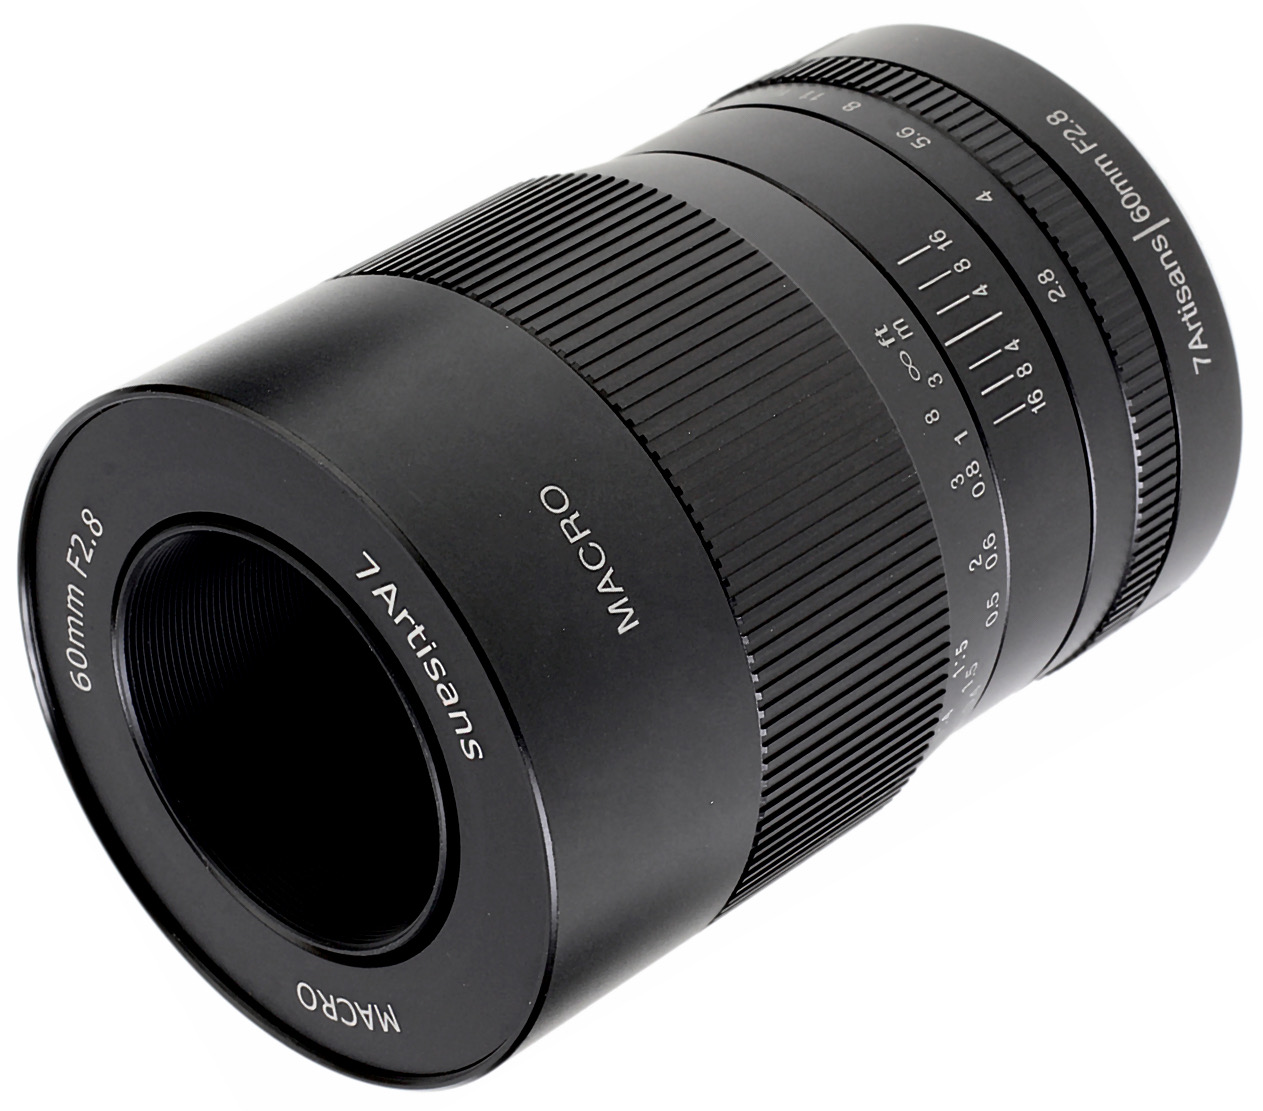 7Artisans 60mm f/2.8 Macro Lens Review | Thom Hogan